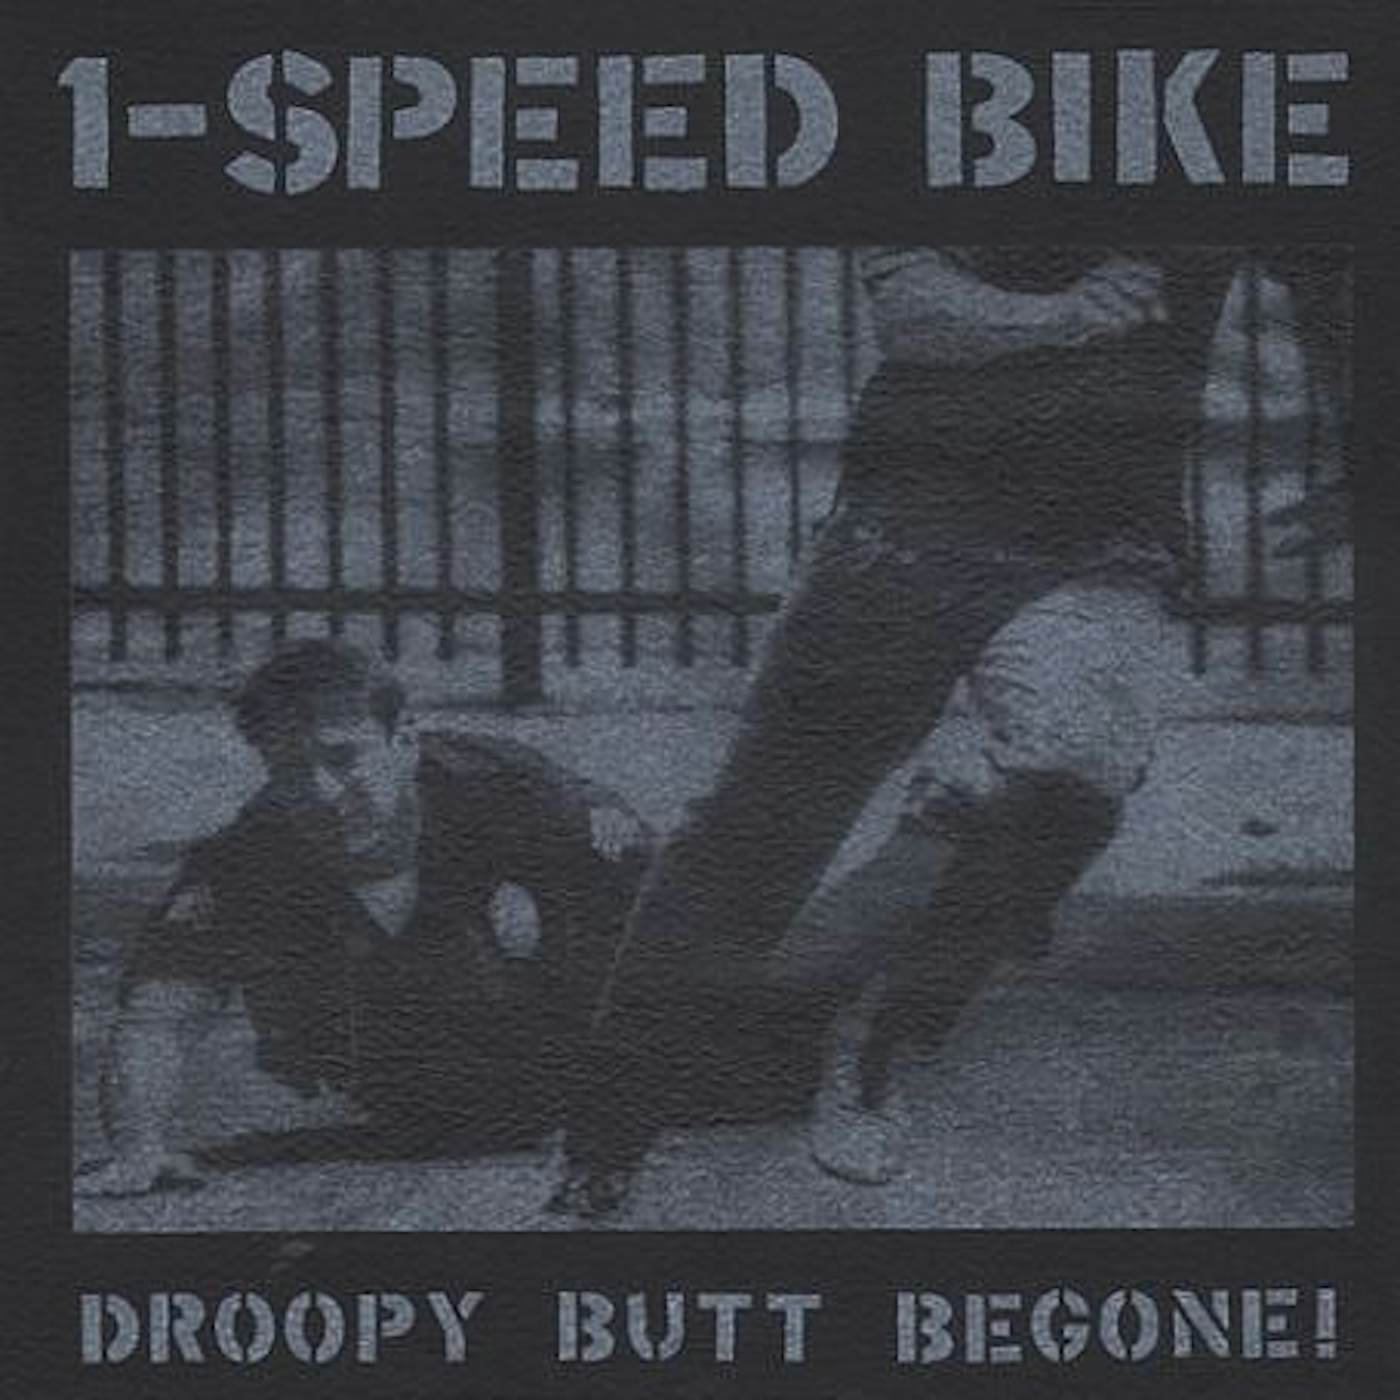 1-Speed Bike DROOPY BUTT BEGONE Vinyl Record